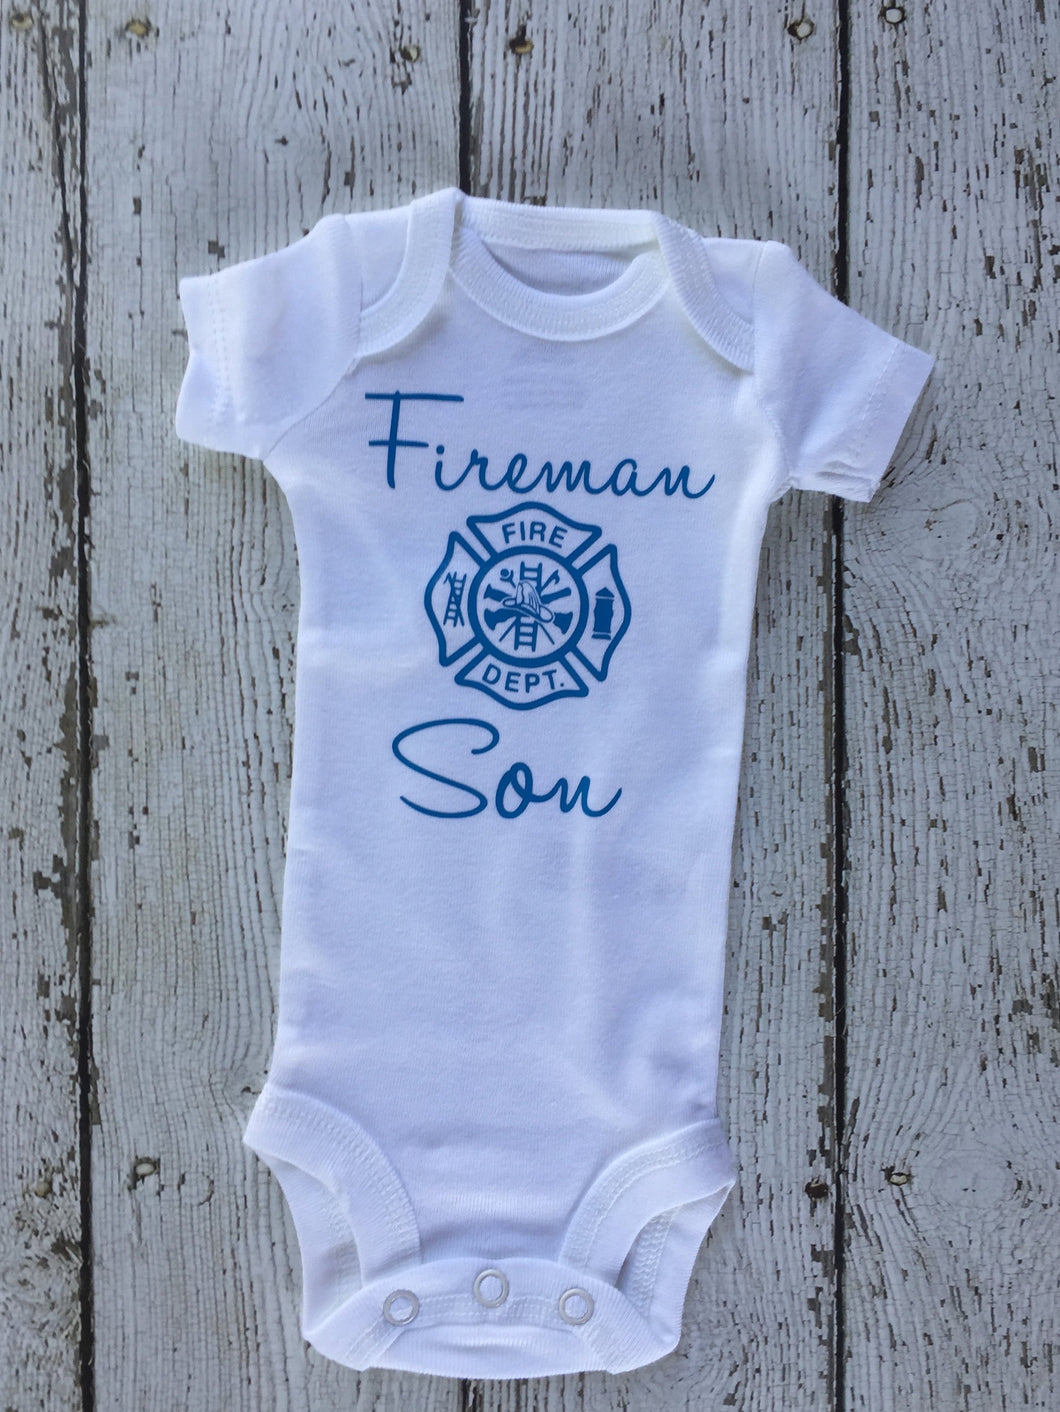 Fireman Son Baby Outfit, Baby Outfit Fireman Son, Outfit Baby Fireman Son, Newborn Fireman Son Gift Idea, Fireman Son Baby Shower Gift